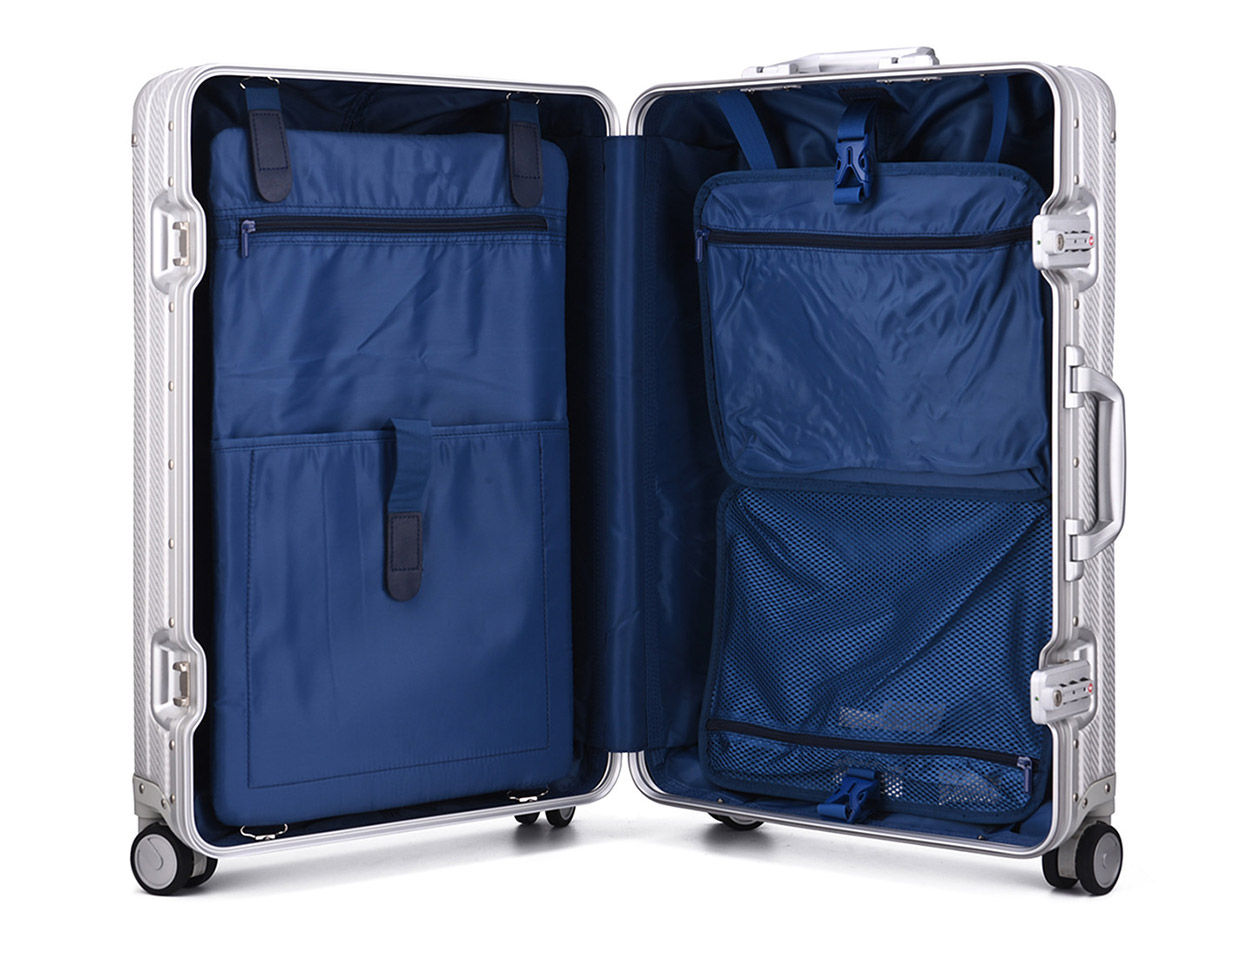 MVST Select Trek Luggage